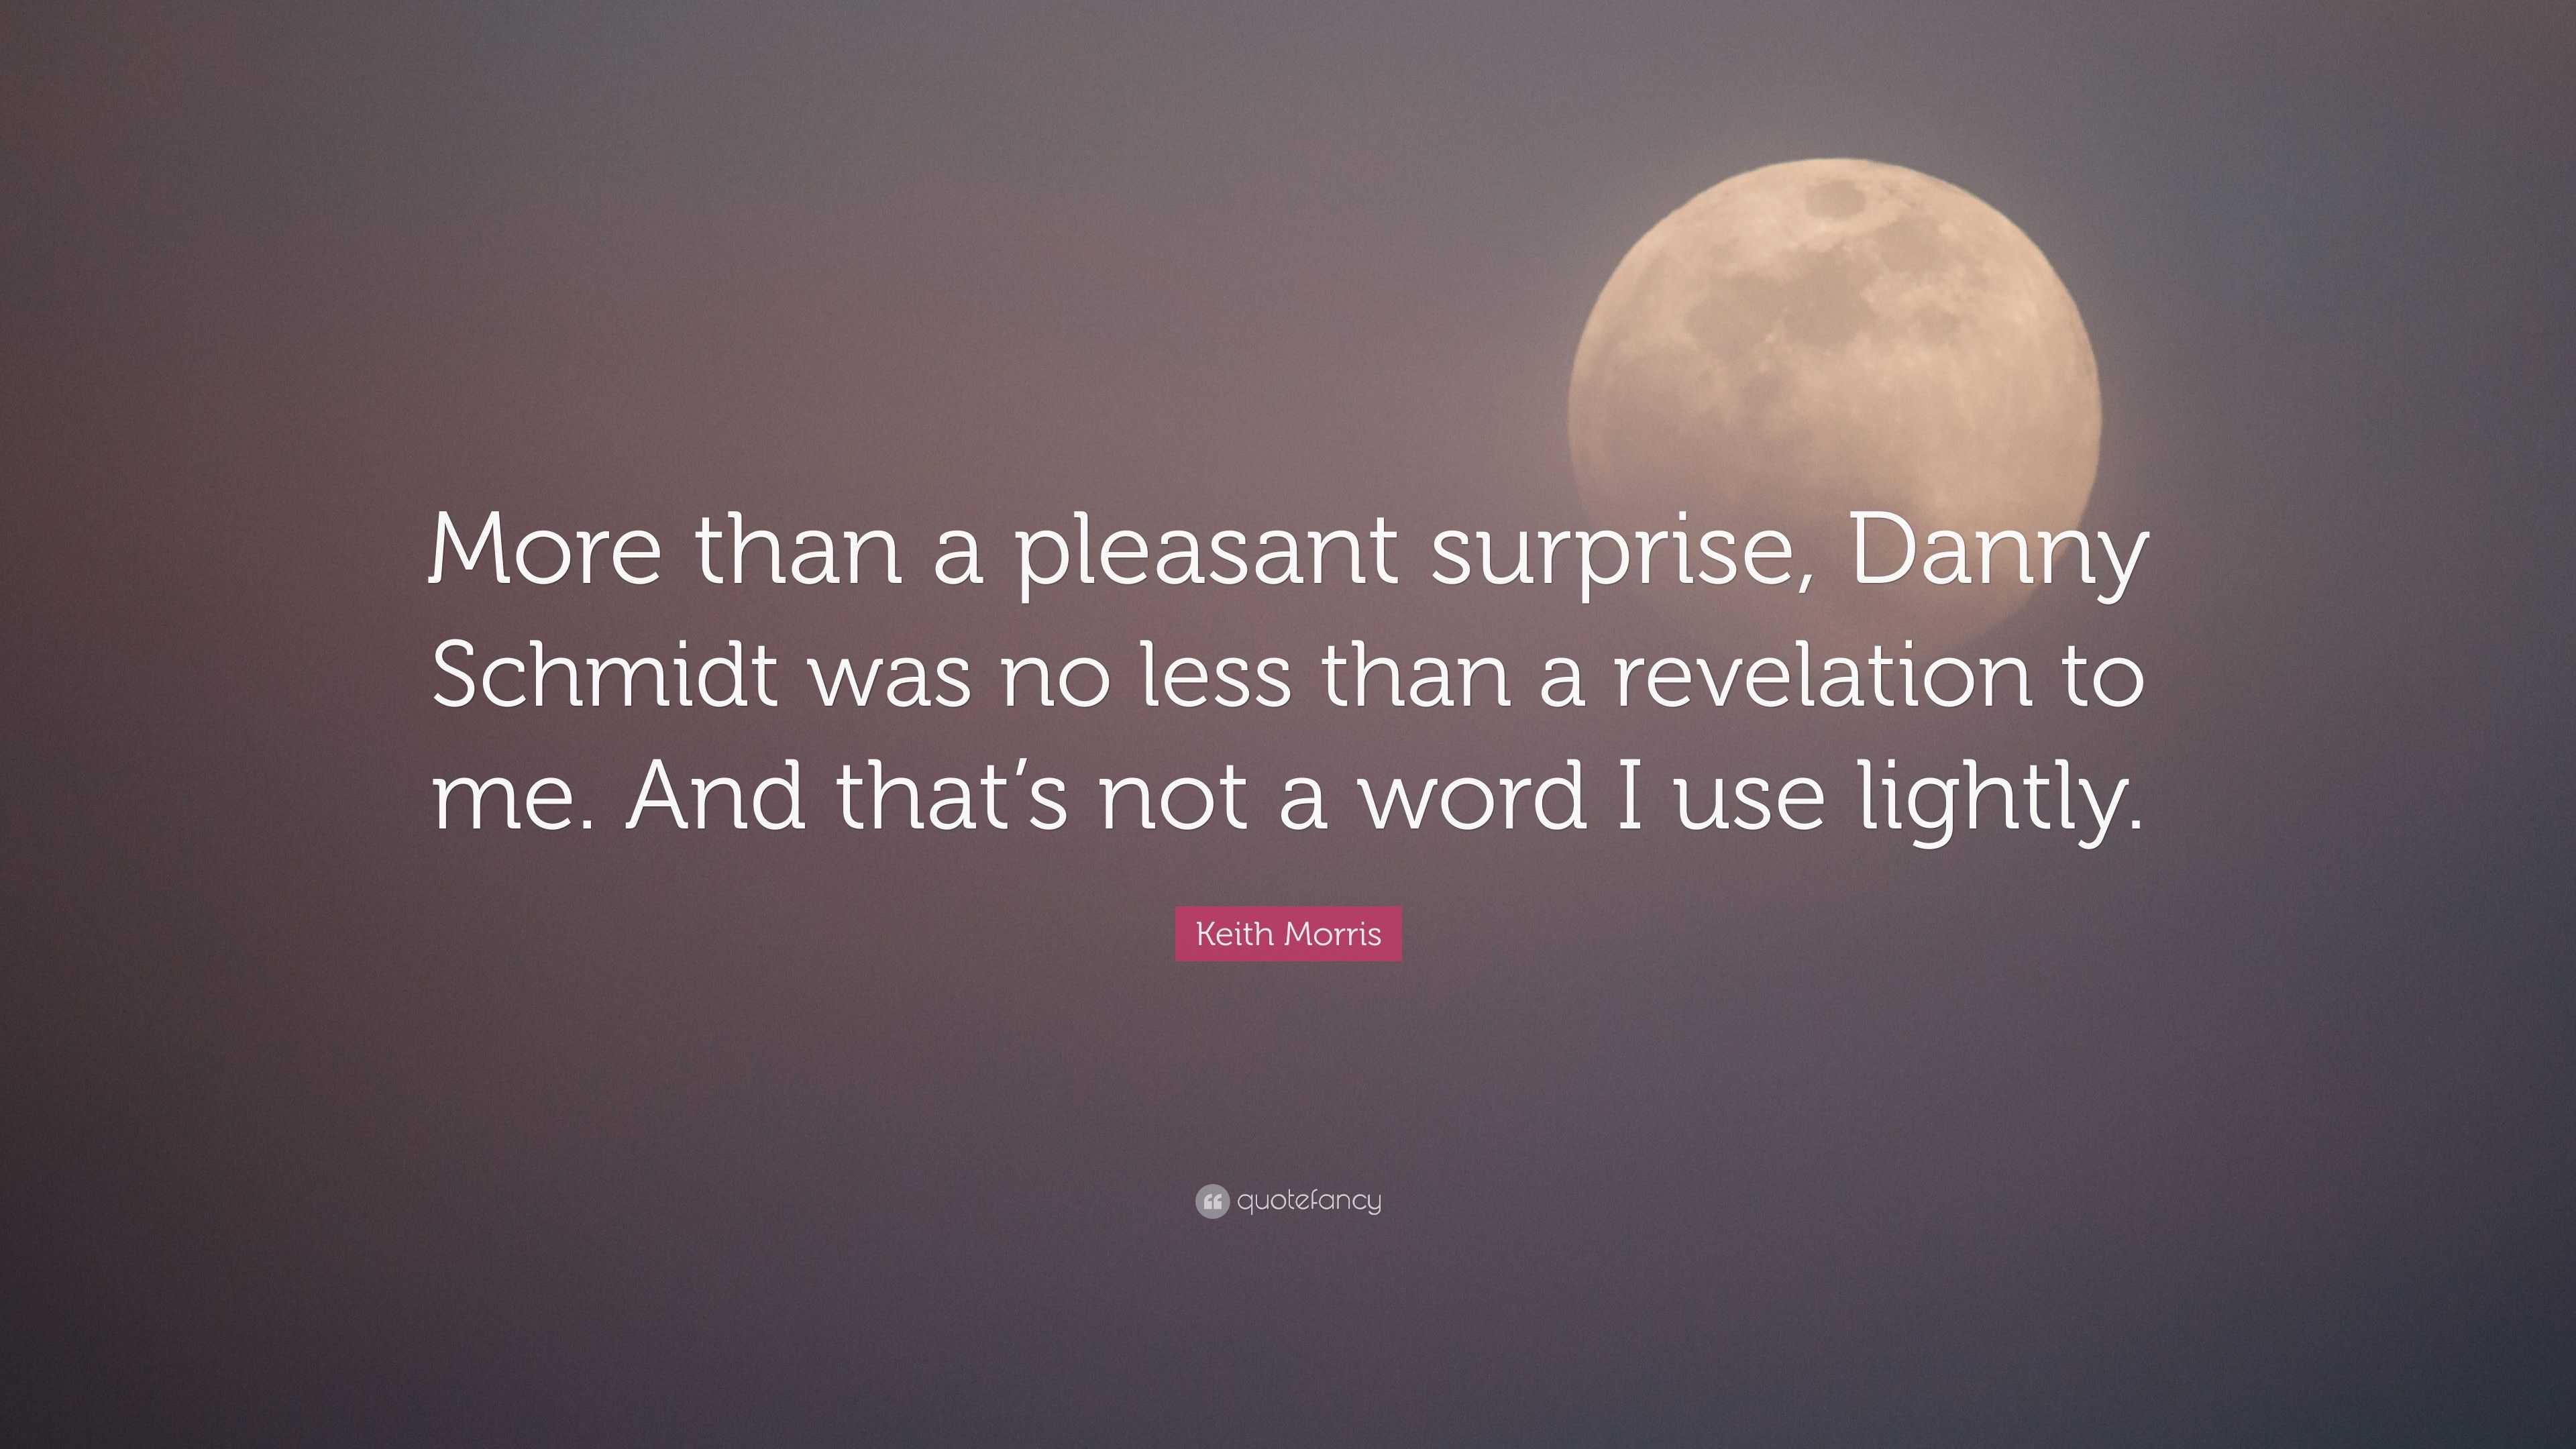 Keith Morris Quote: “More than a pleasant surprise, Danny Schmidt was ...